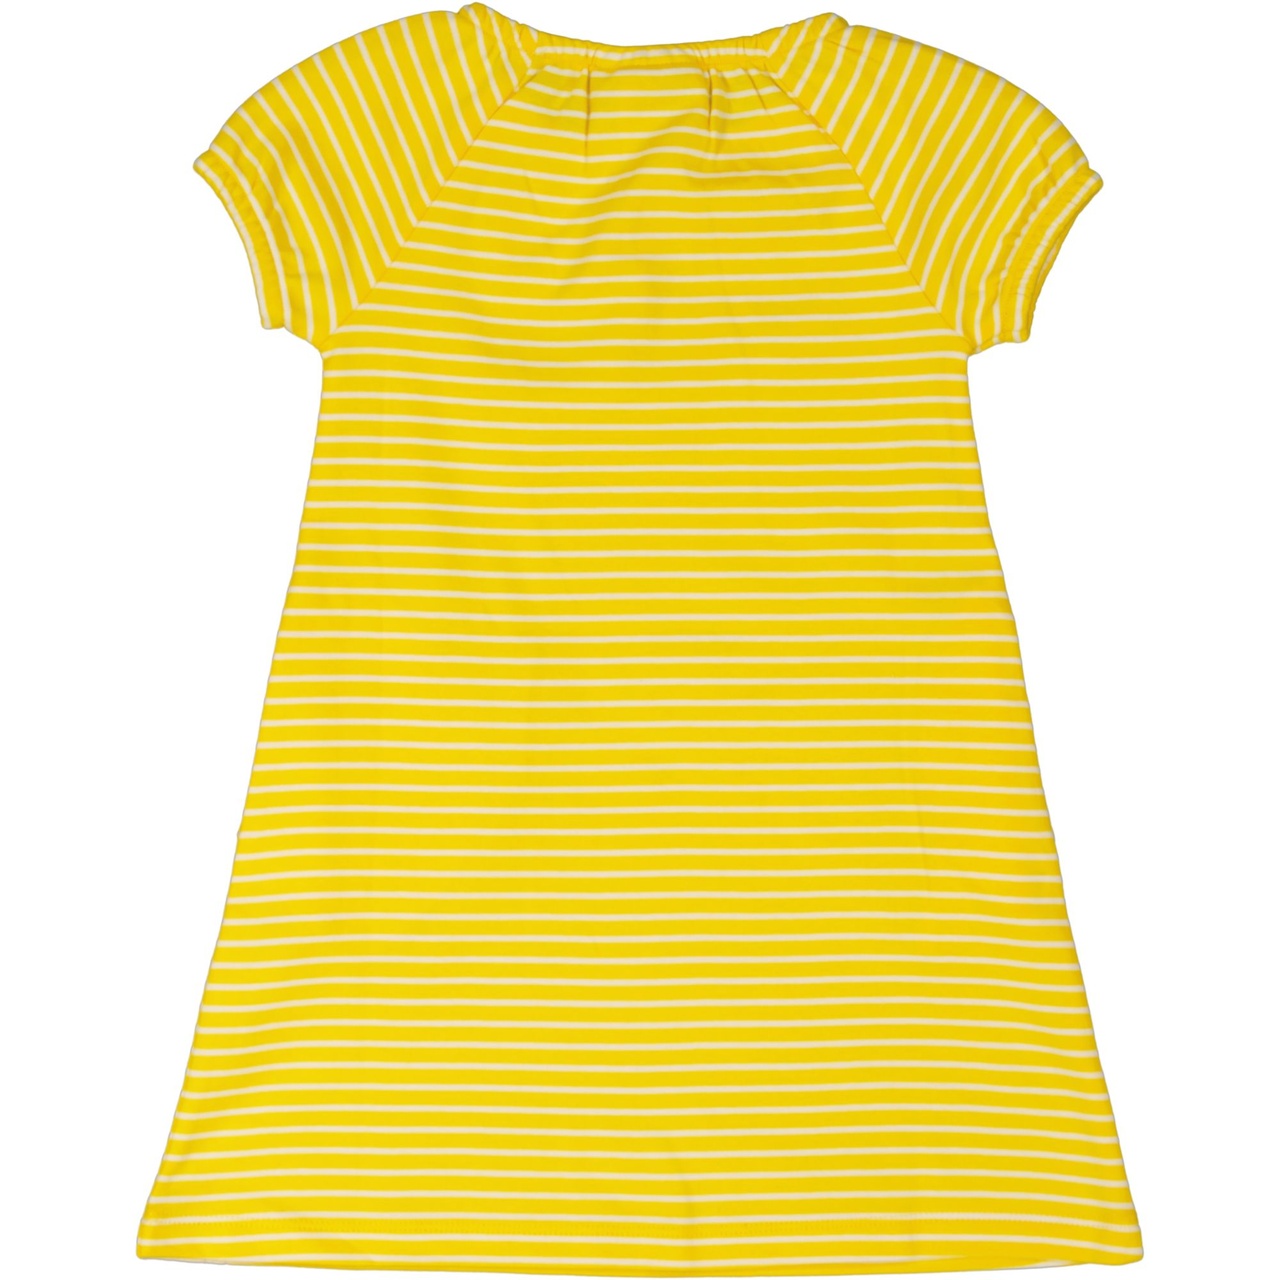 Singoalla dress Yellow/white  134/140